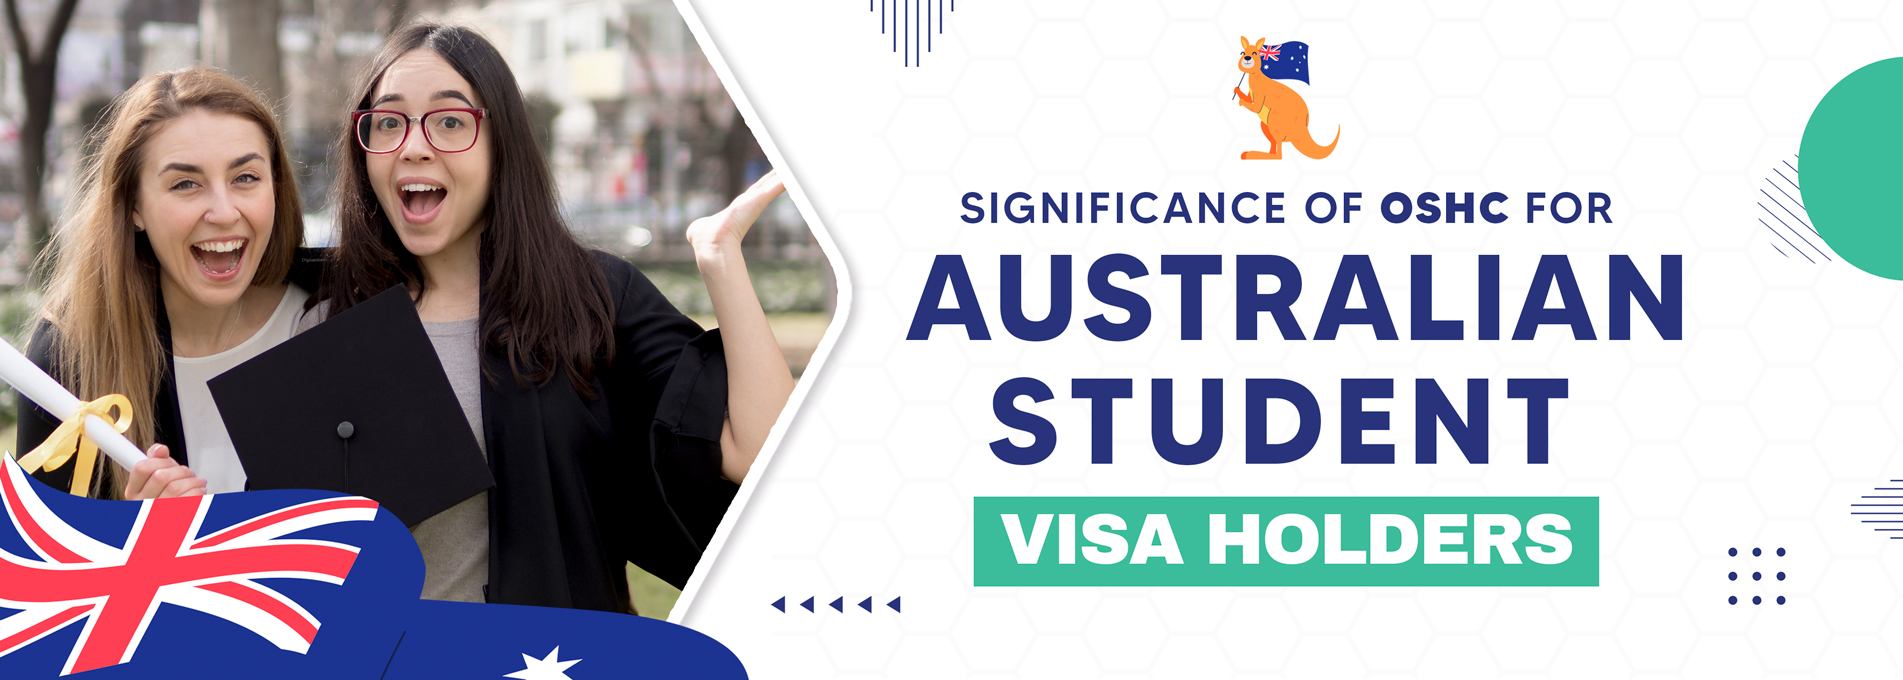 Significance of OSHC for Australian Student Visa Holders